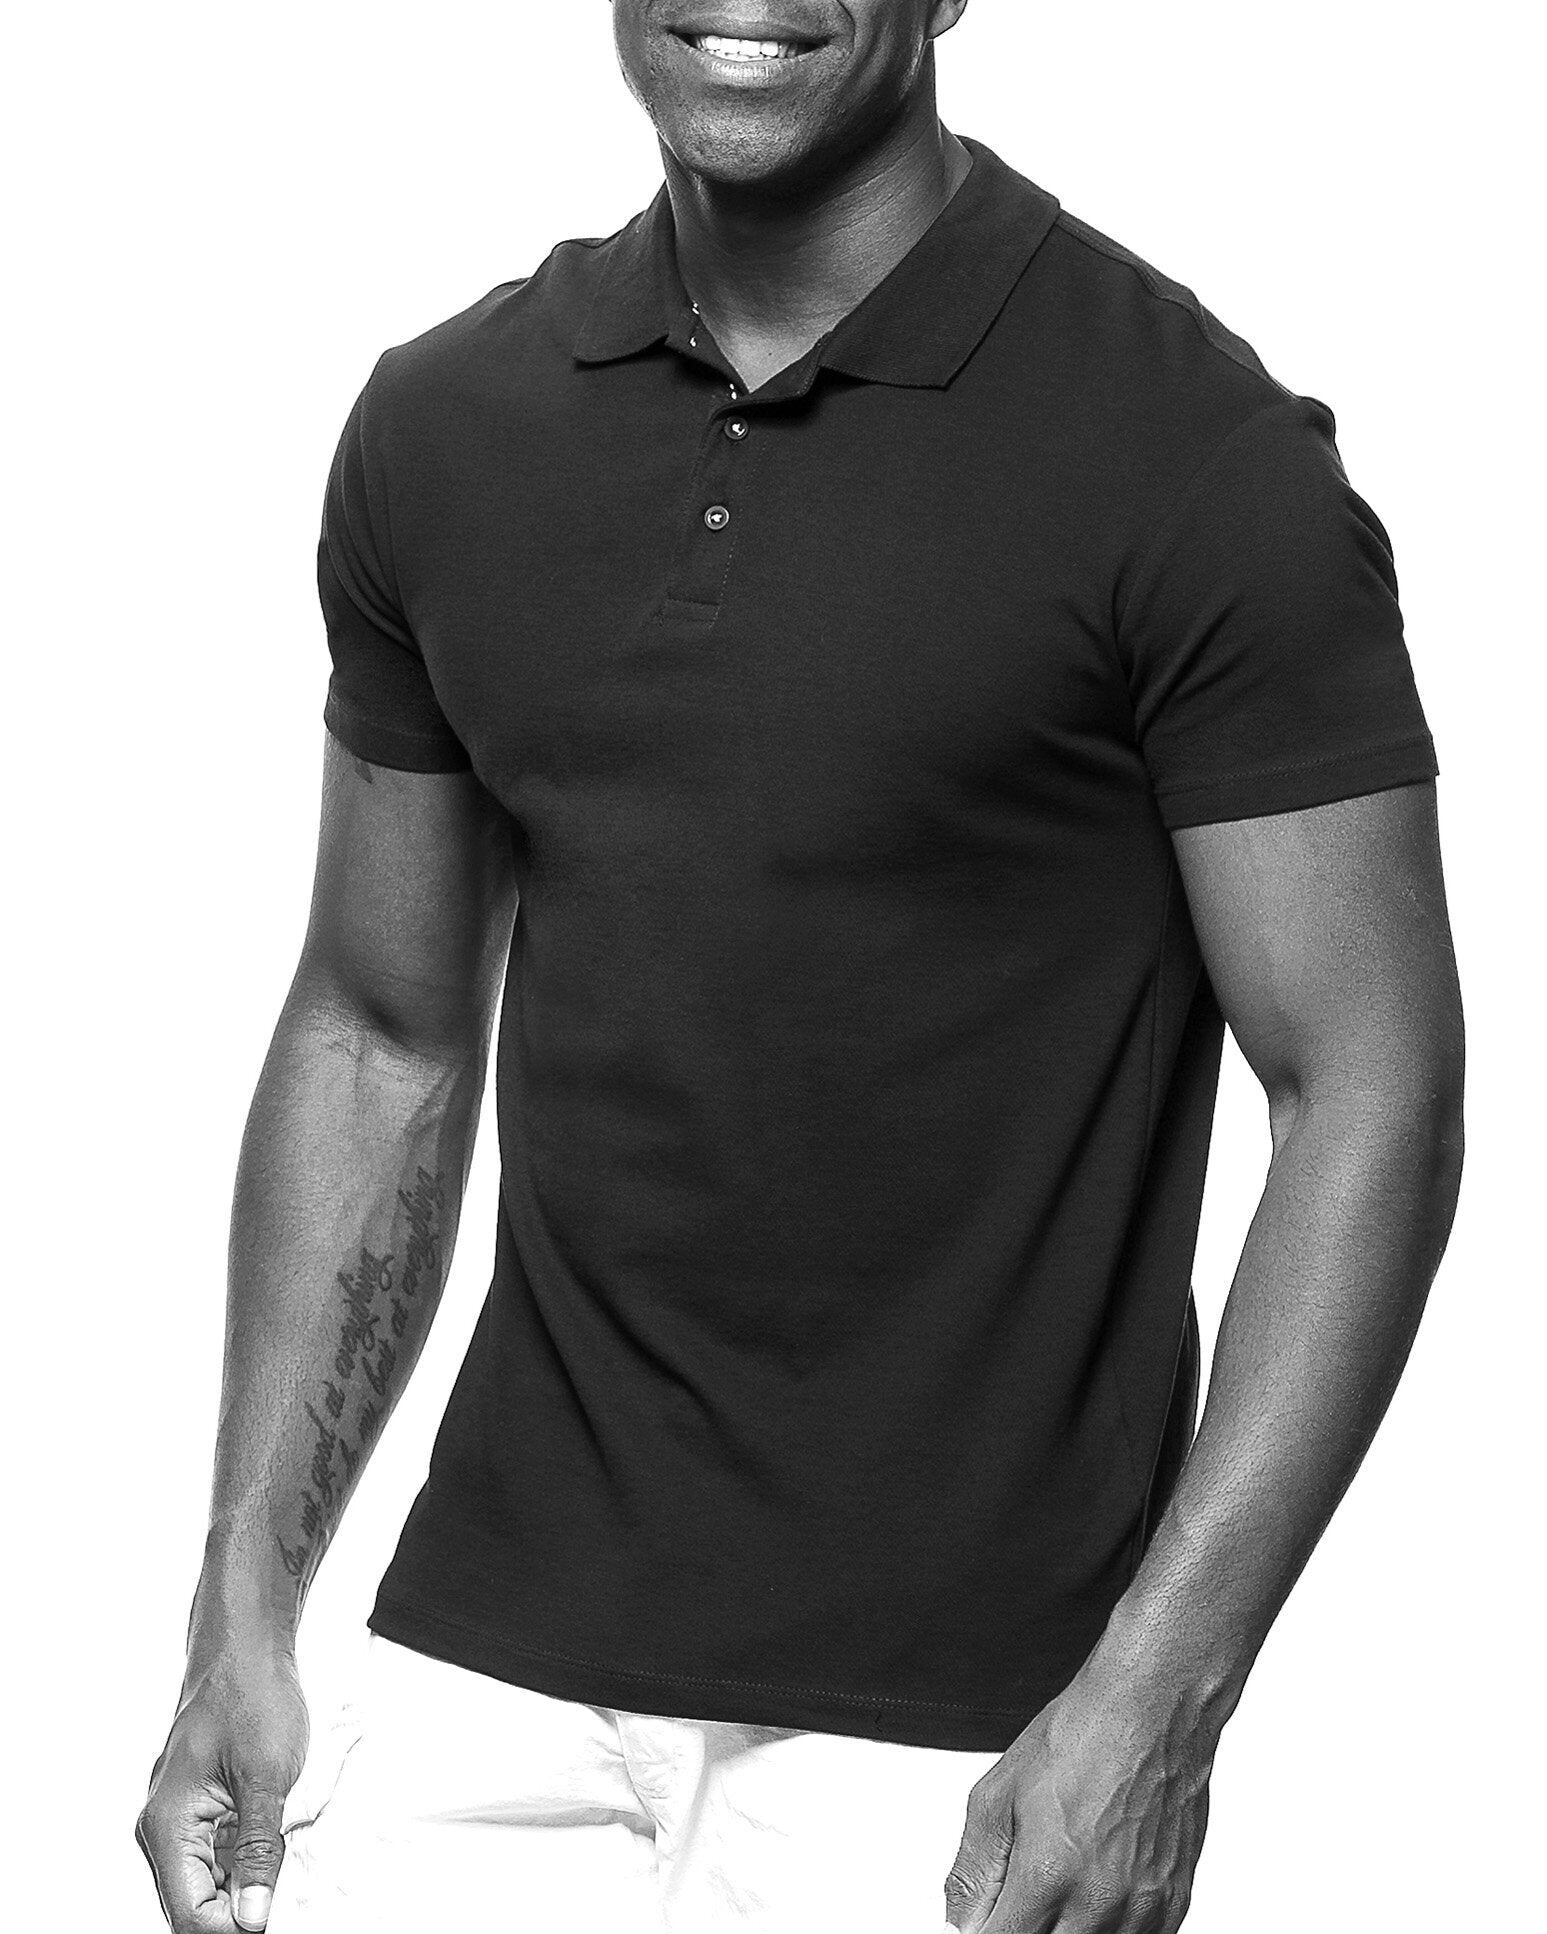 The black base polo shirt blackswing.golf - blackswing.golf Shirts & Tops